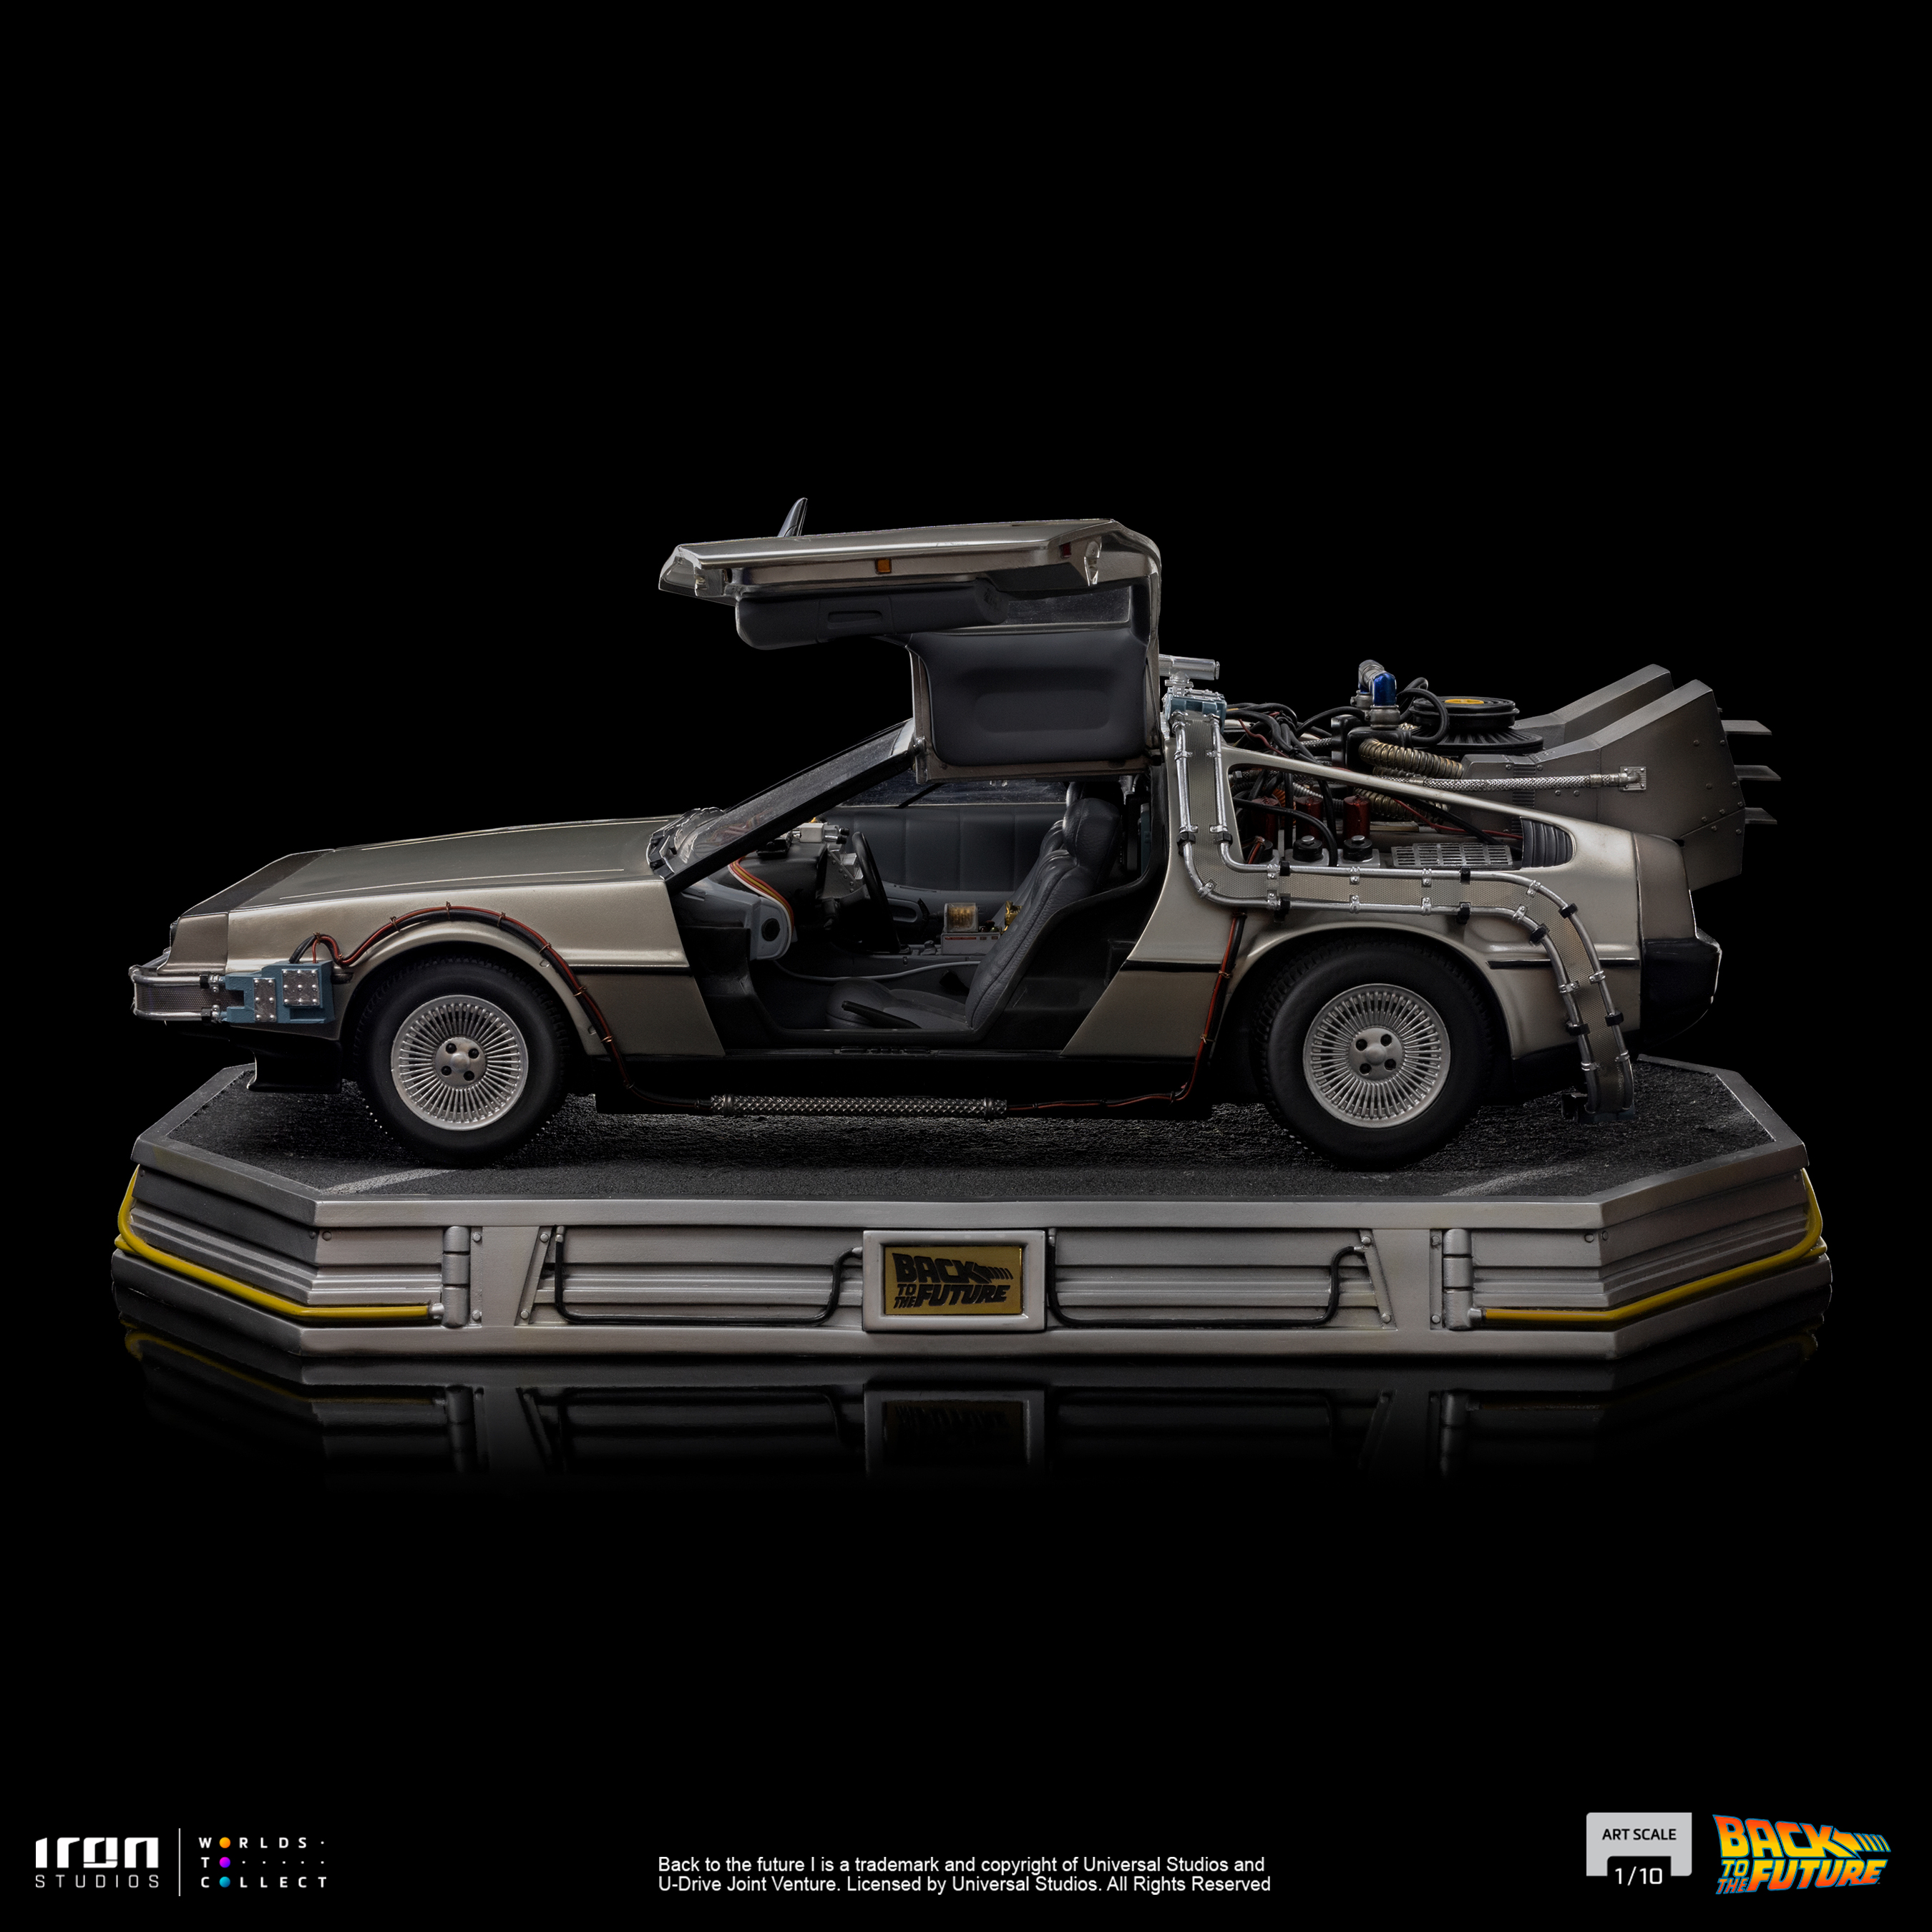 DeLorean Collector Edition (Prototype Shown) View 3